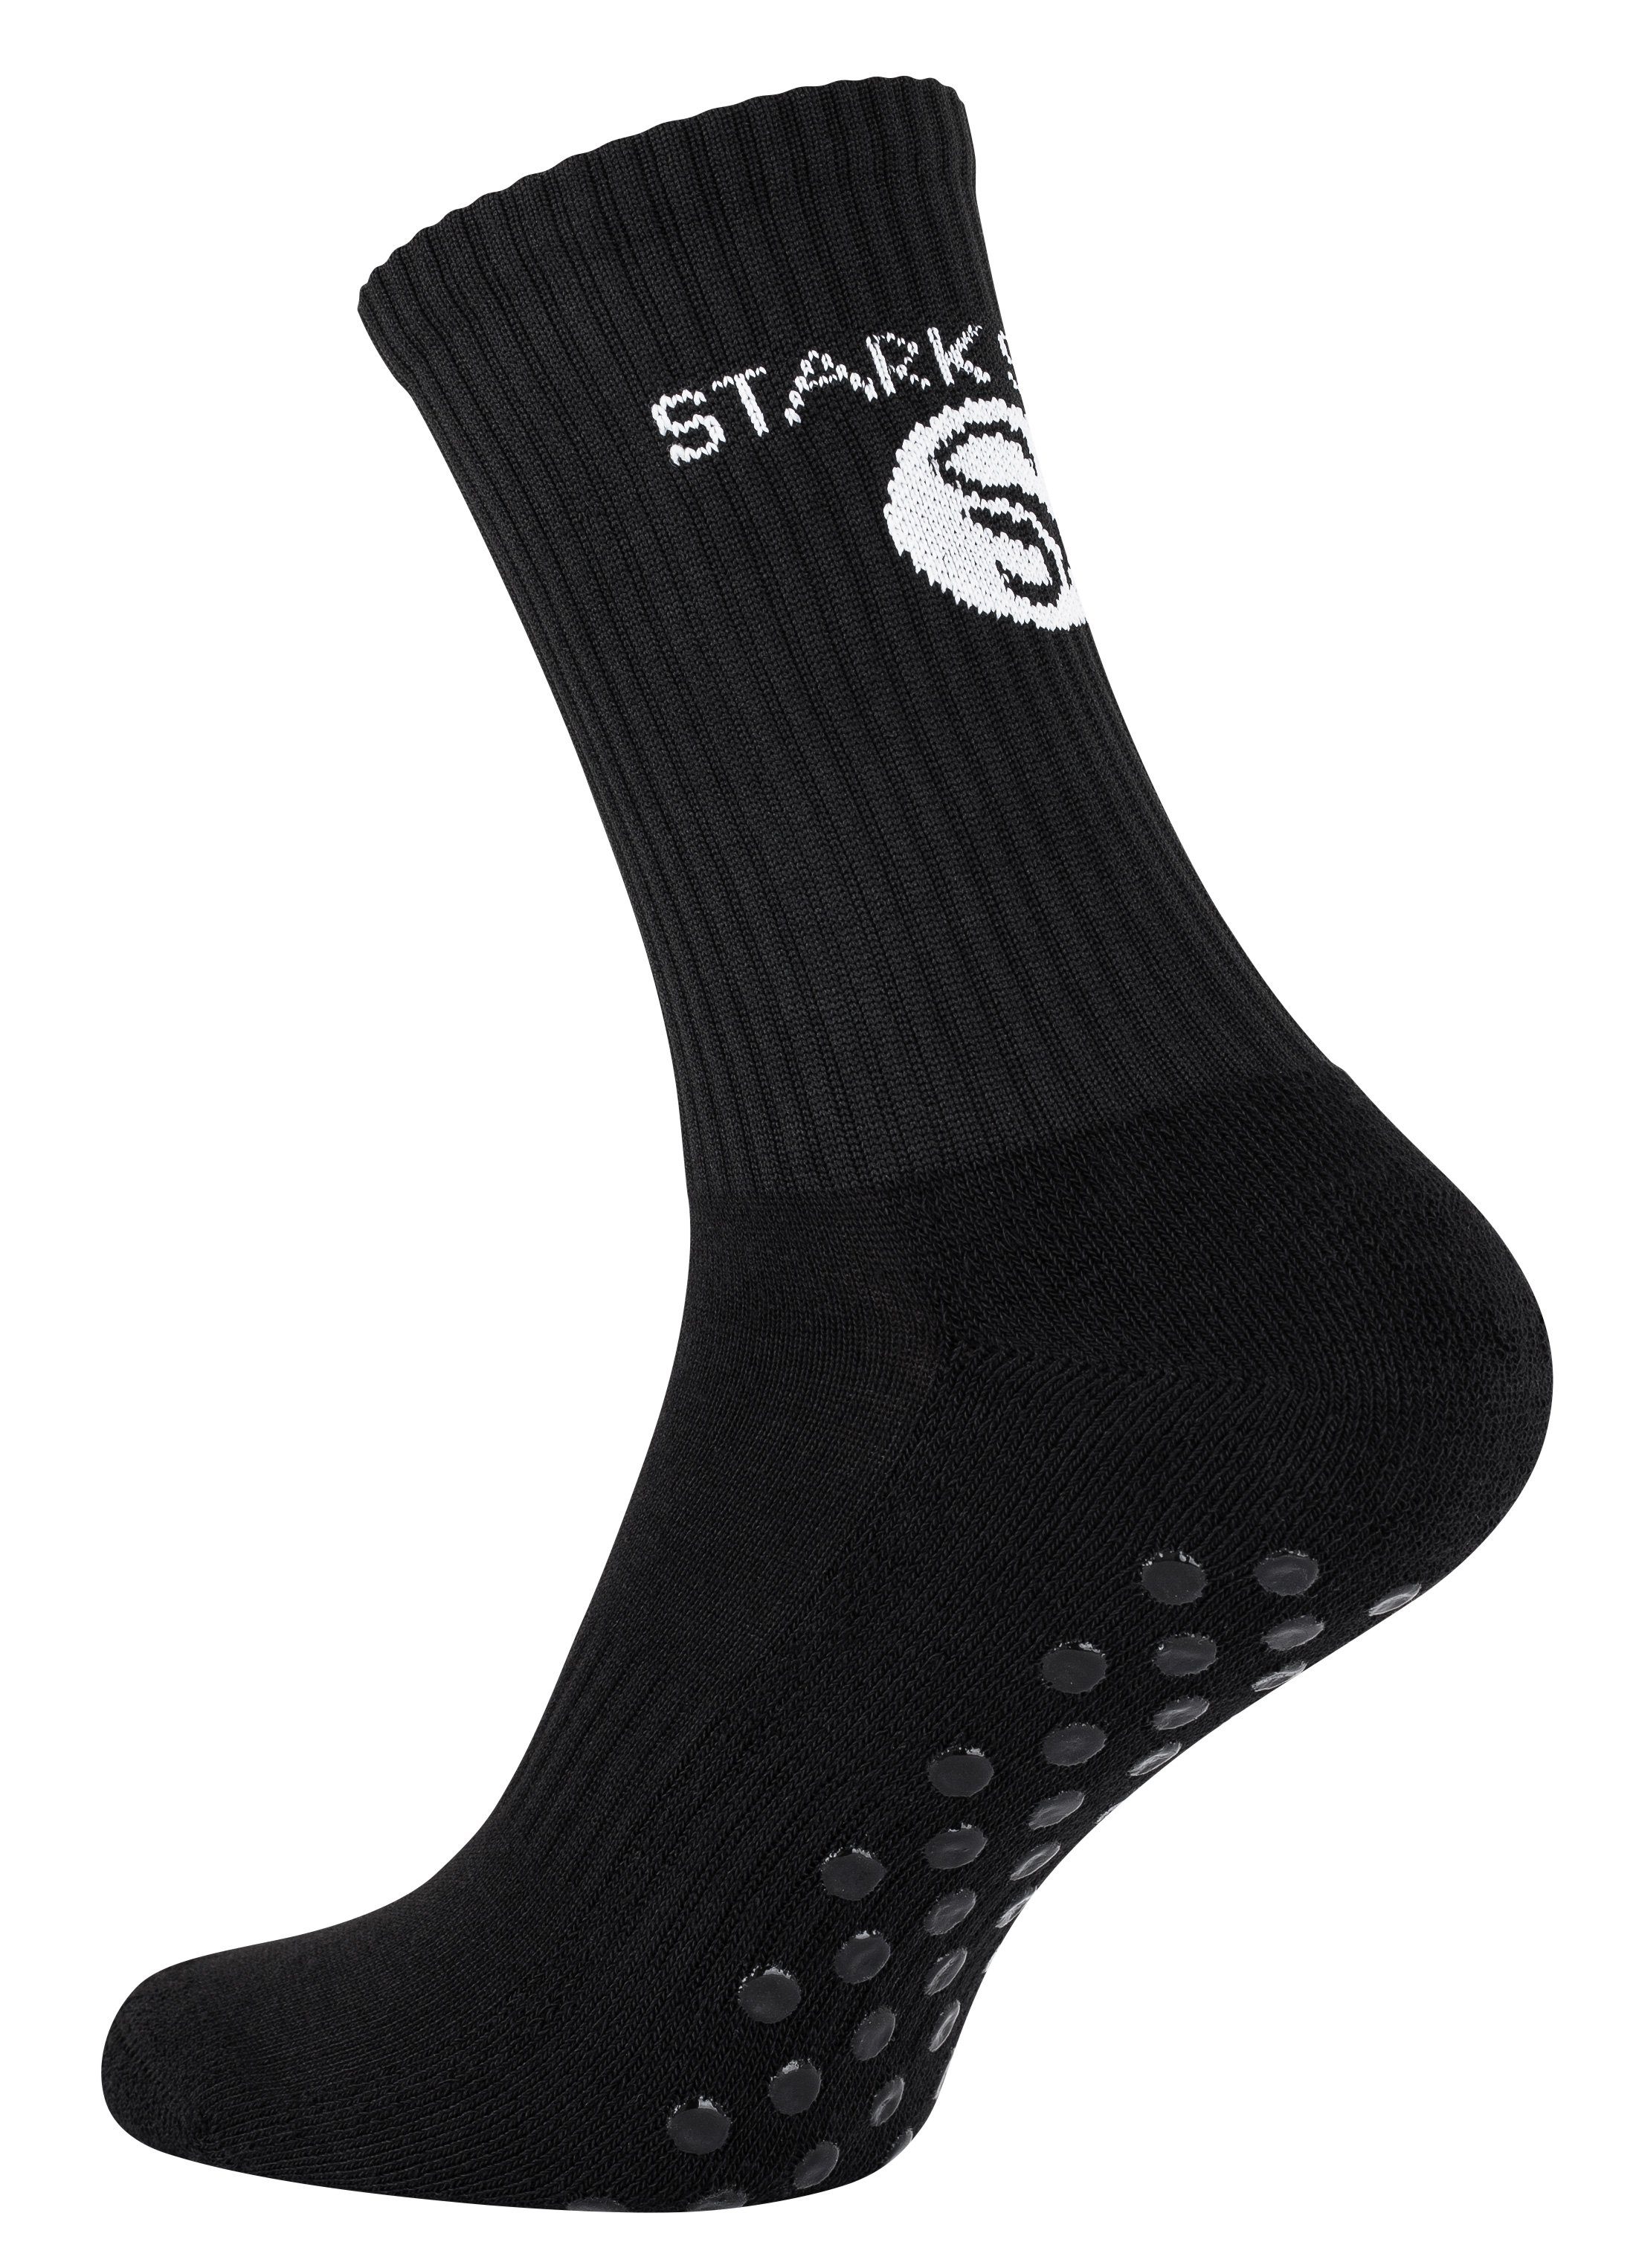 Stark Soul® Sportsocken »Rutschfeste Sportsocken - Fußball Socken mit Anti- Rutsch-Sohle« online kaufen | OTTO